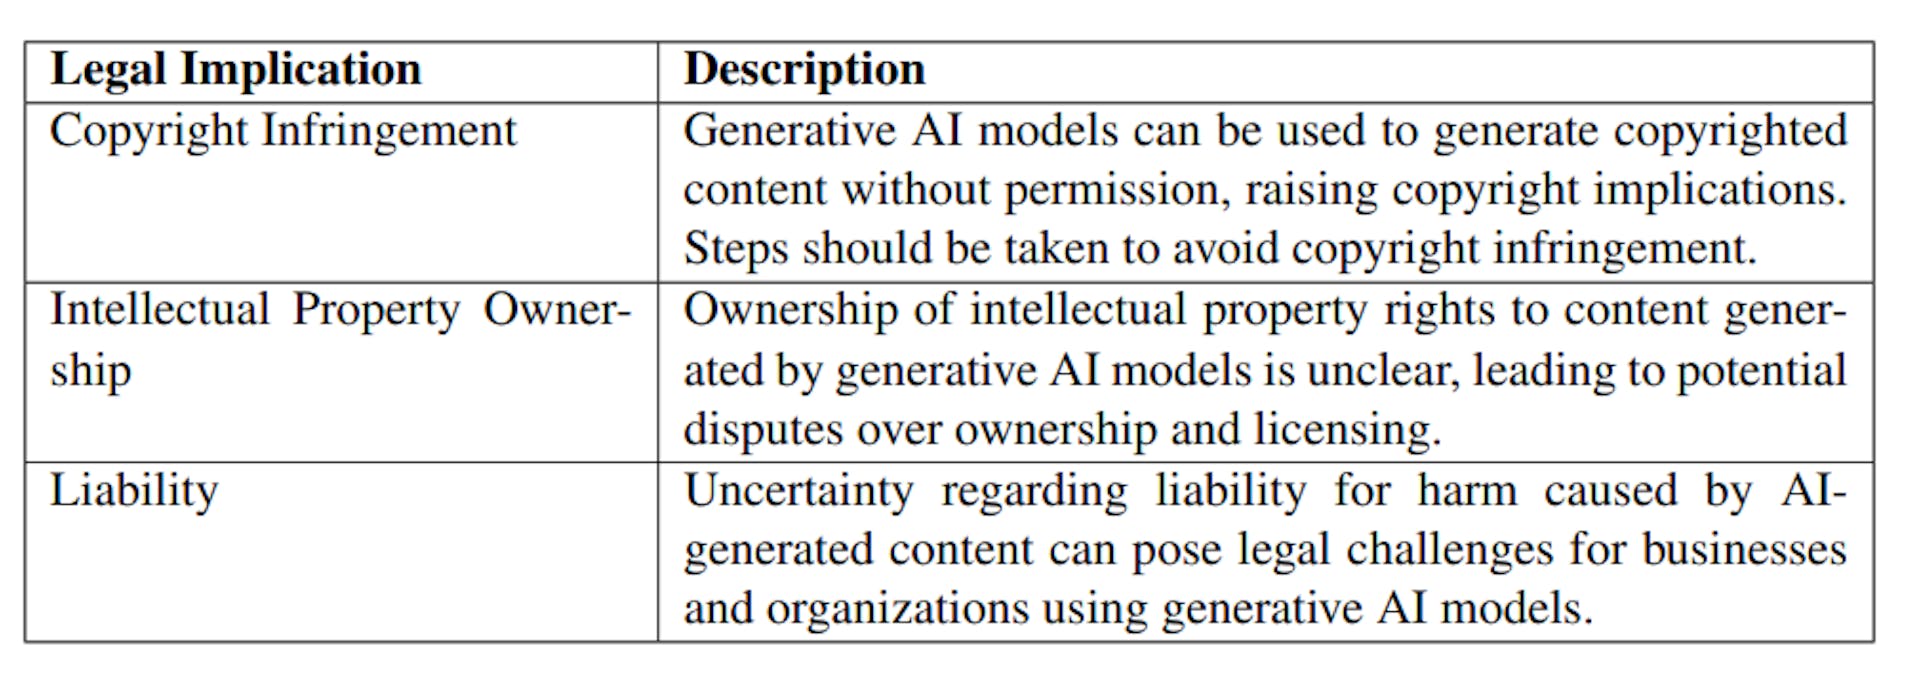 Table 4: Legal Implications of Using Generative AI Models